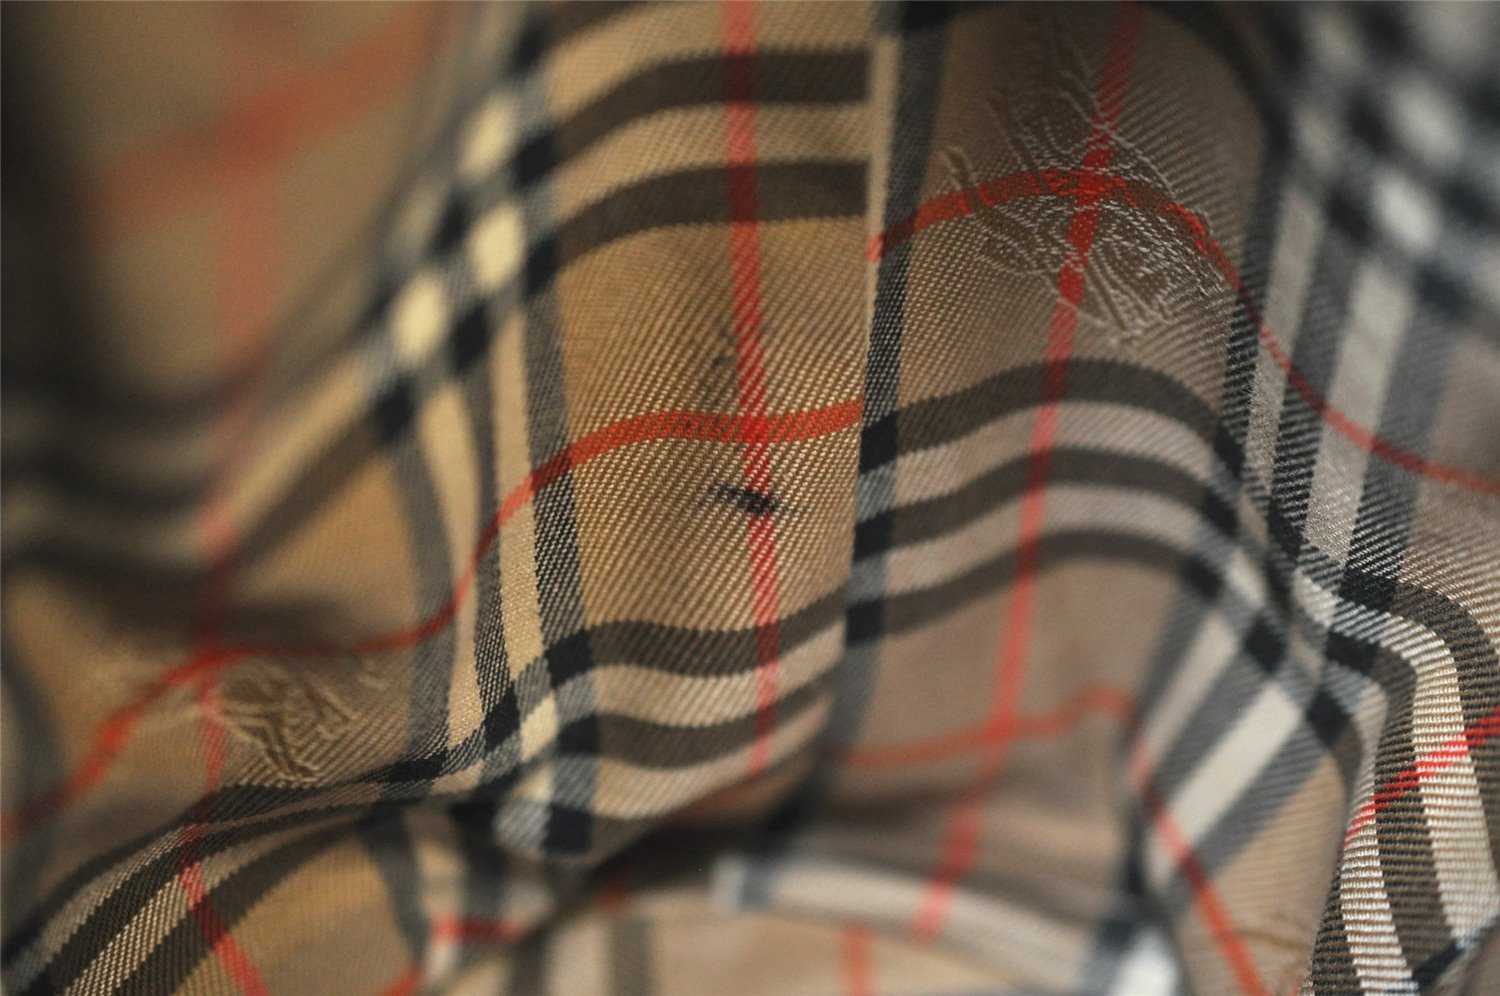 Authentic Burberrys Leather Shoulder Cross Body Drawstring Bag Purse Brown 4911J